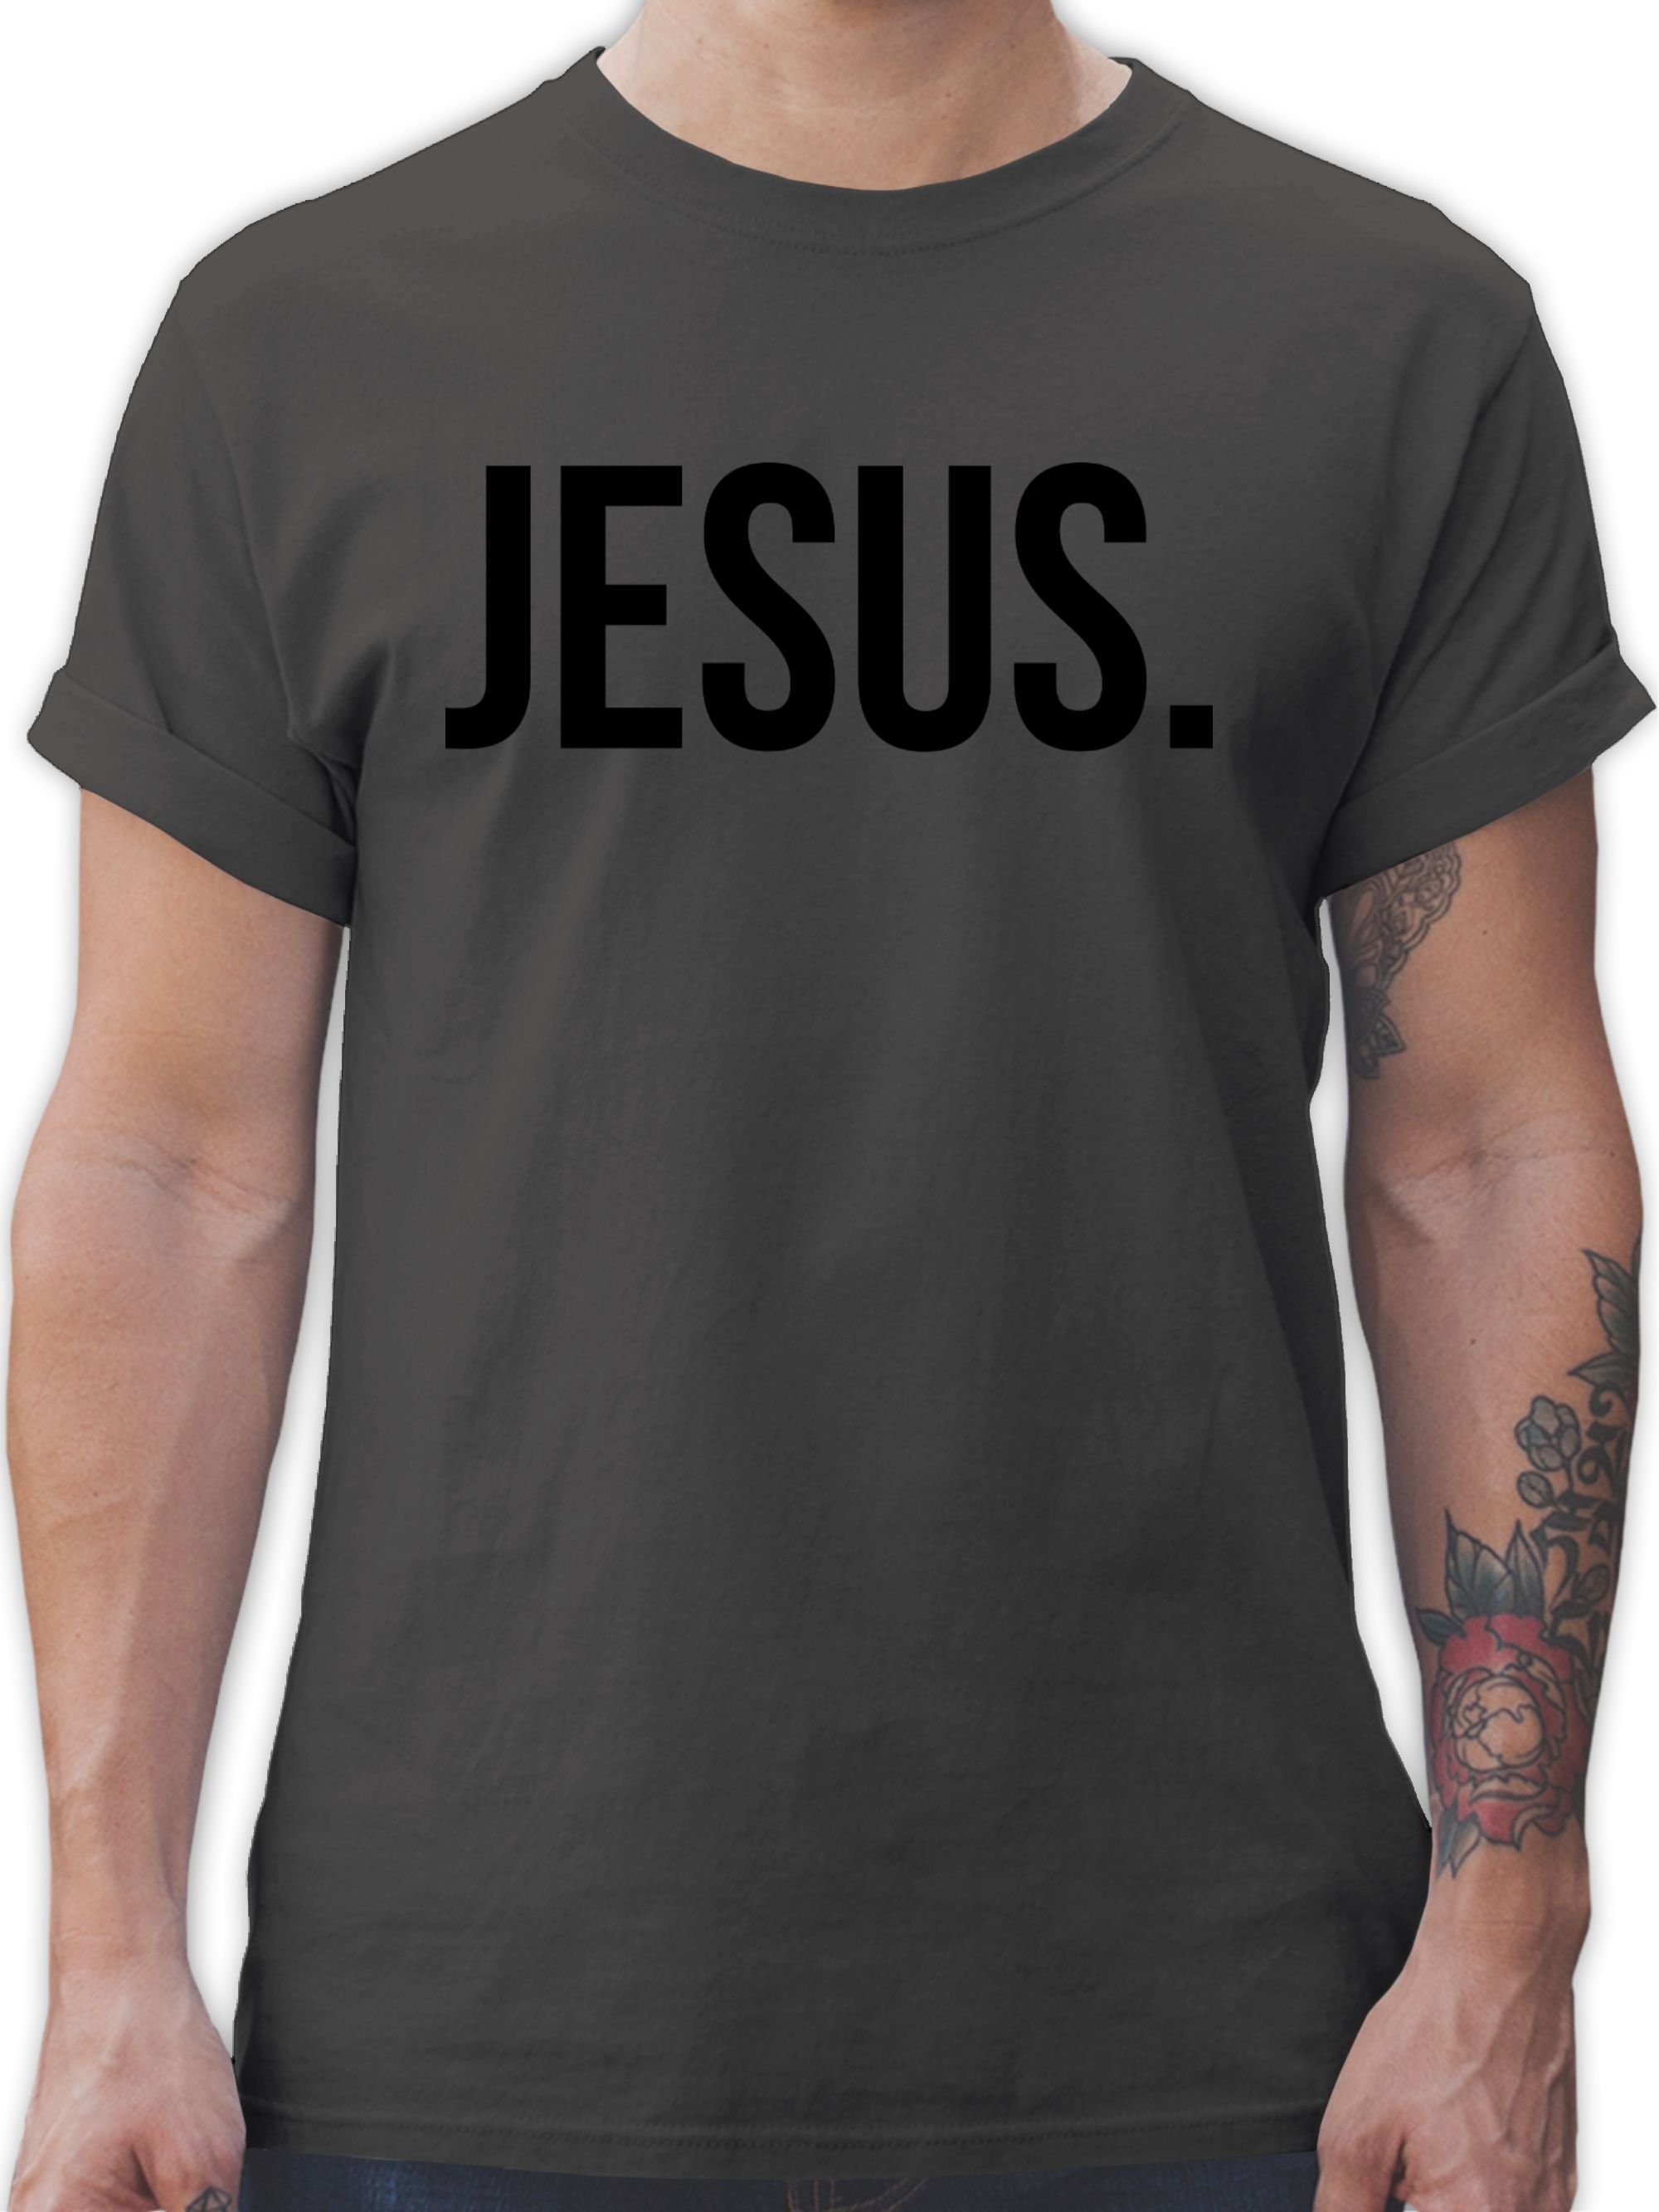 Statement Shirtracer 3 Christus T-Shirt Dunkelgrau Religion Jesus Glaube